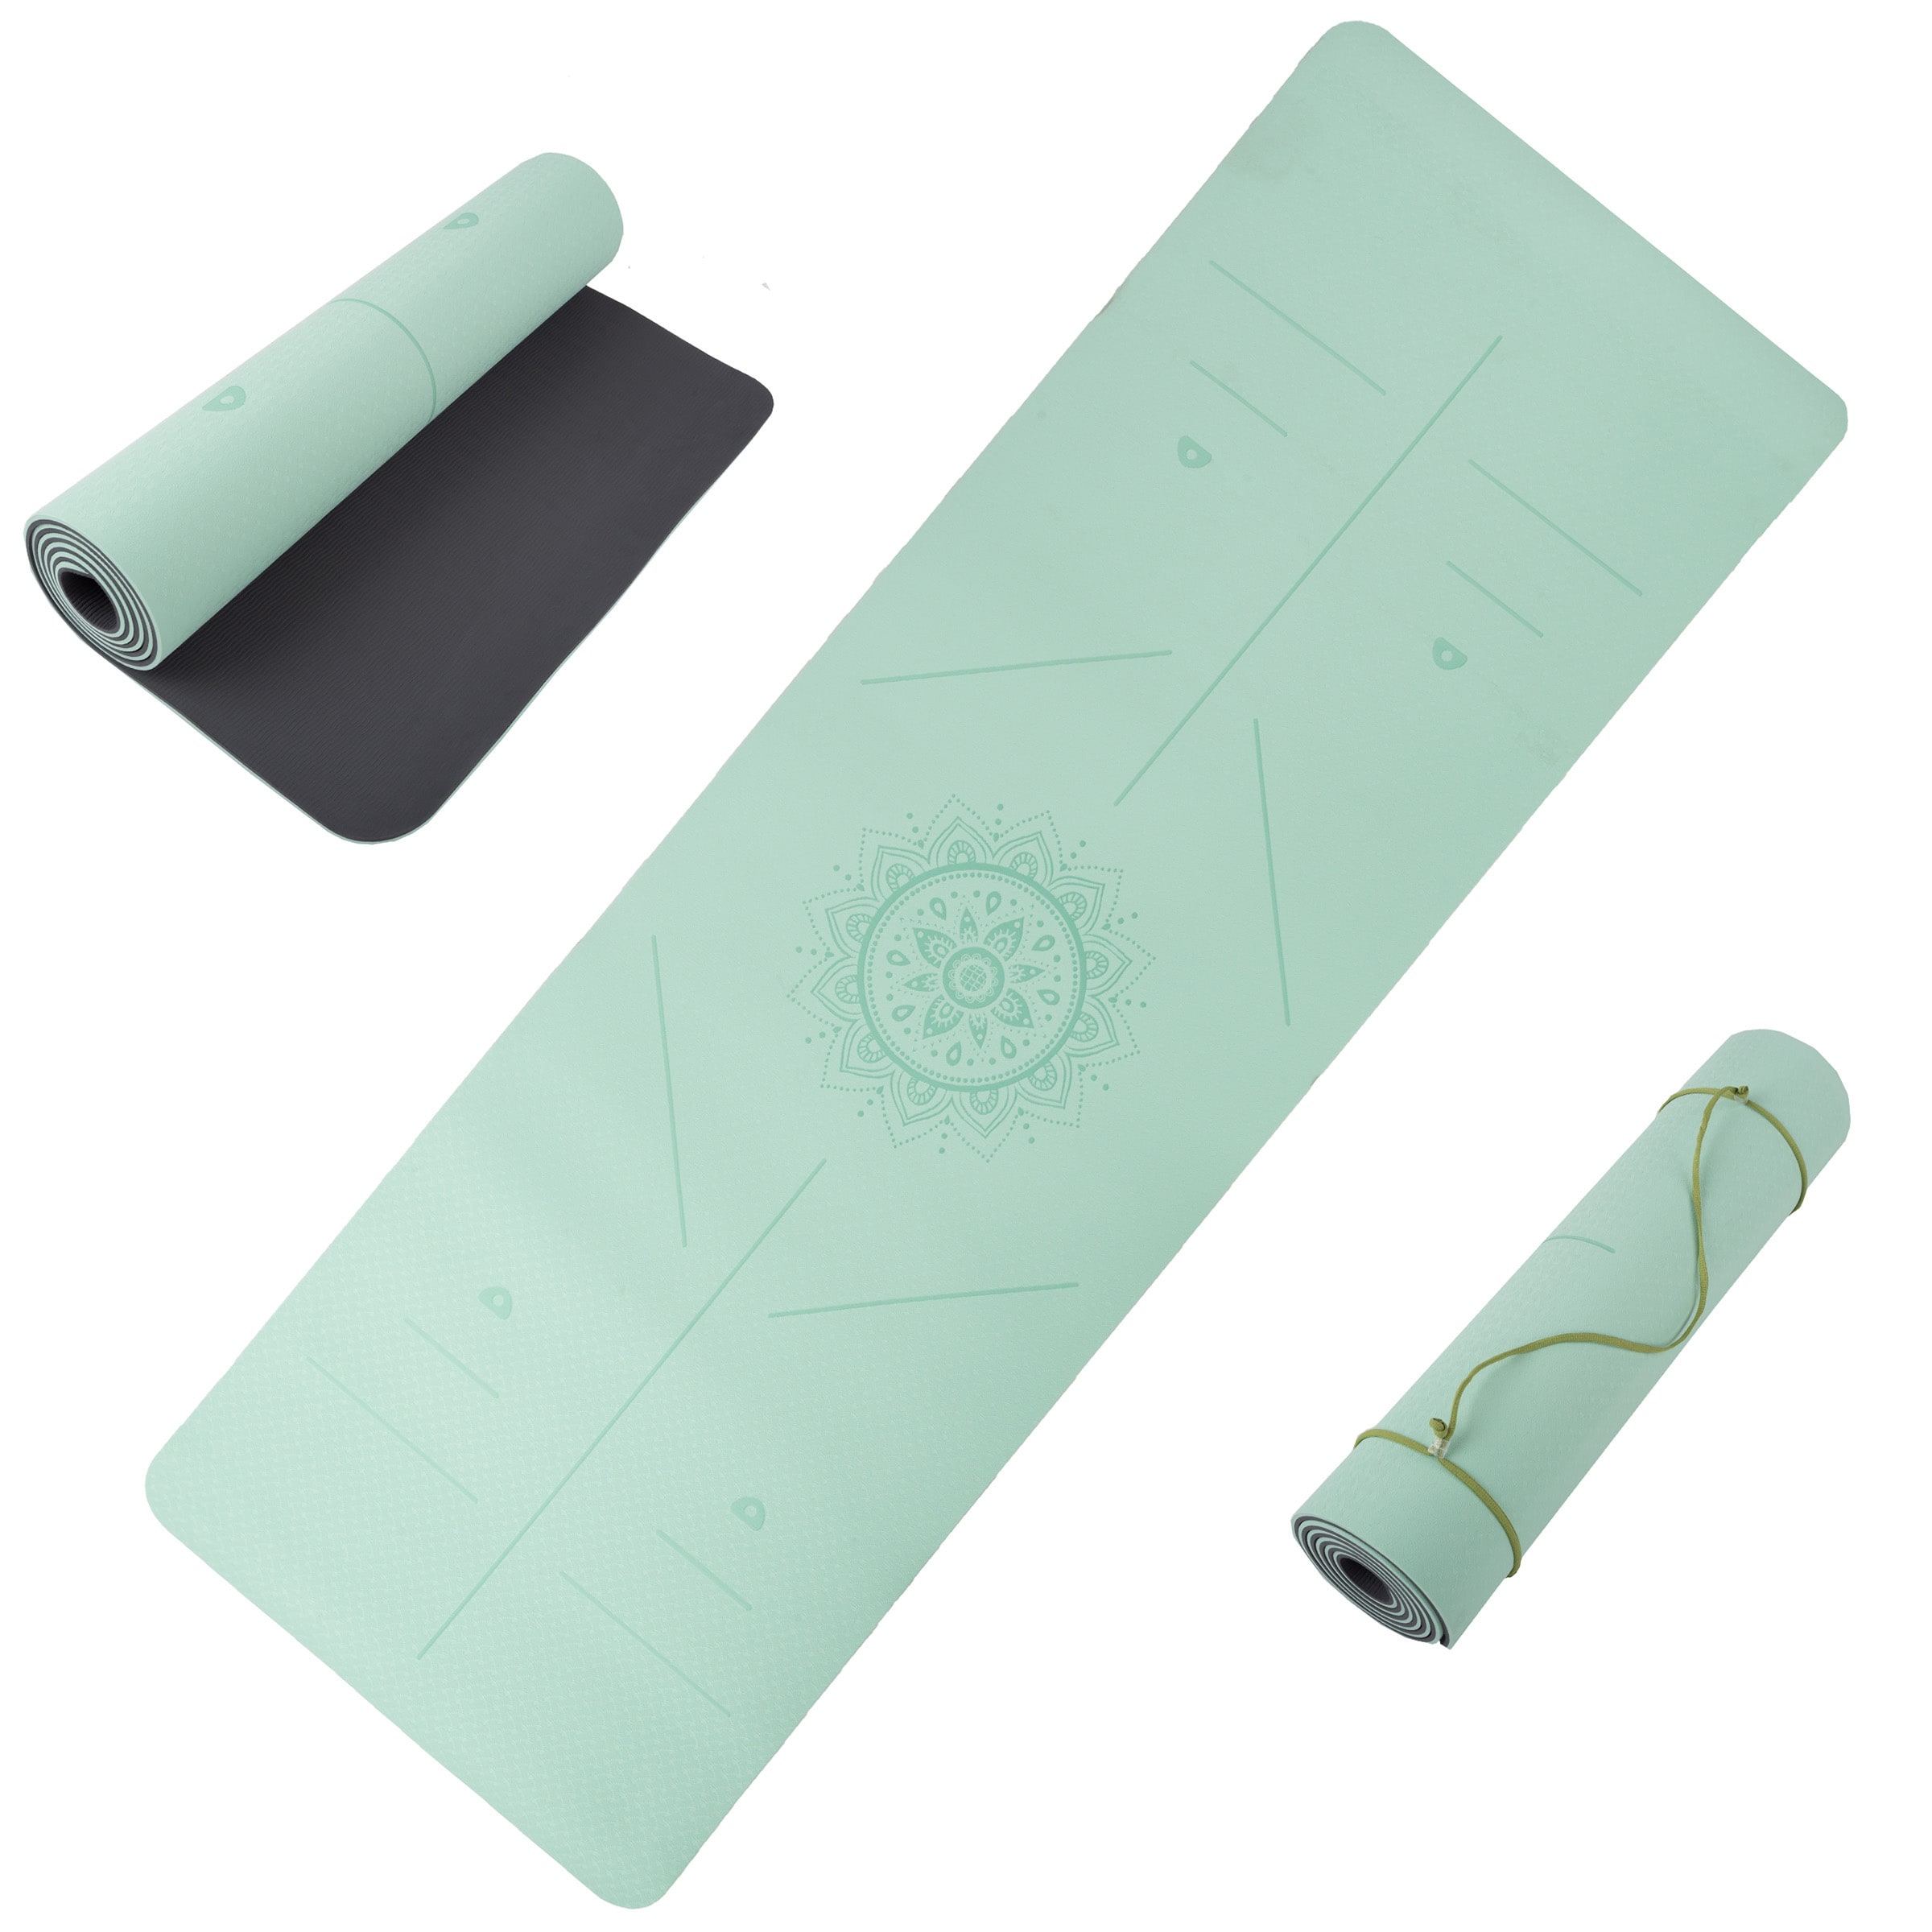 Wakeman Alignment Guide Yoga Mat - Non-Slip, Tear-Resistant TPE